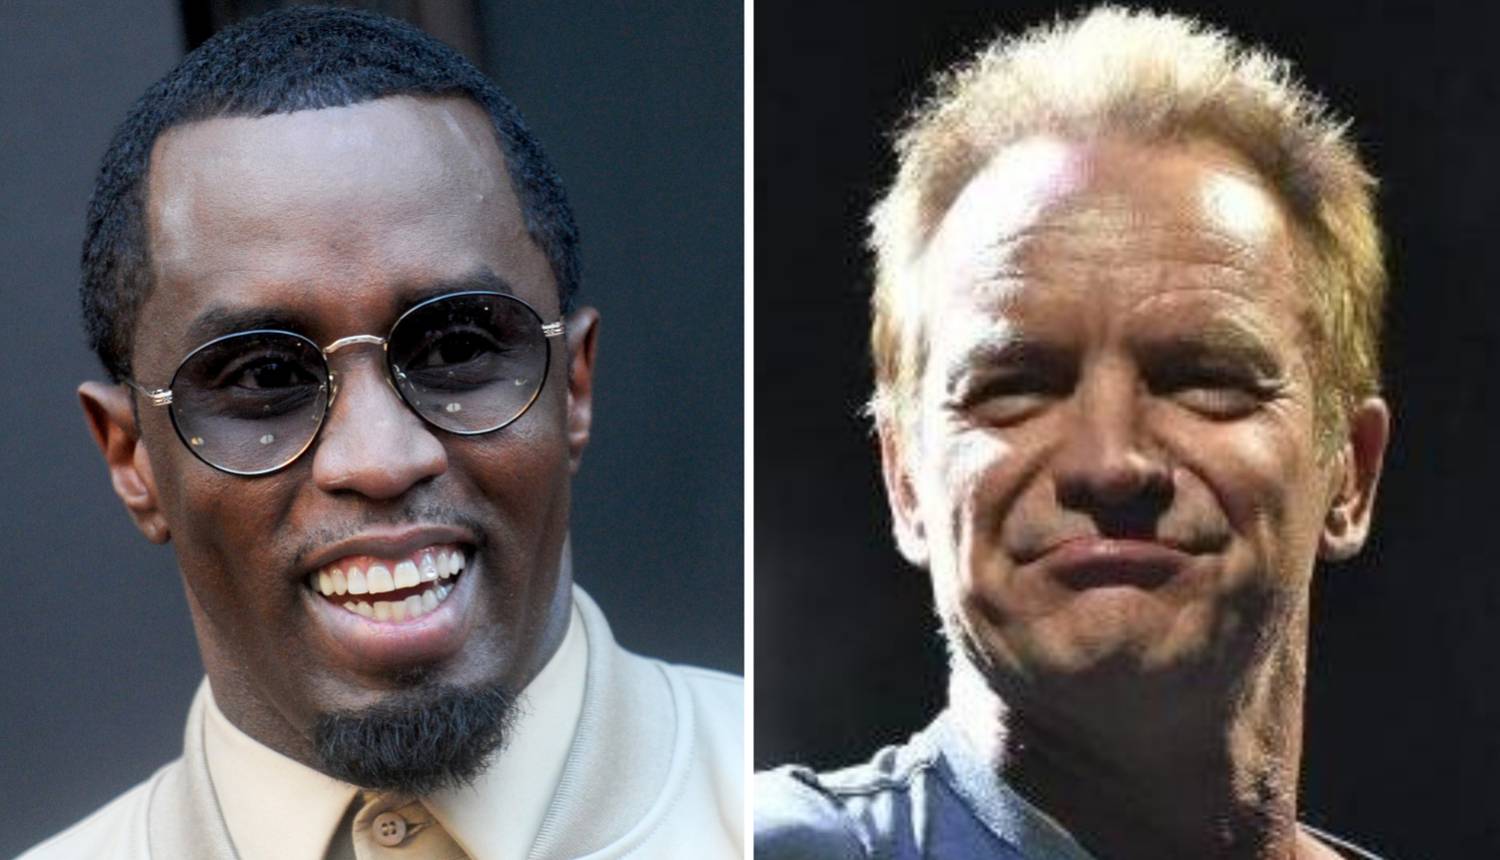 P. Diddy mora Stingu svaki dan plaćati 5 tisuća dolara, razlog tome je hit 'I'll Be Missing You'